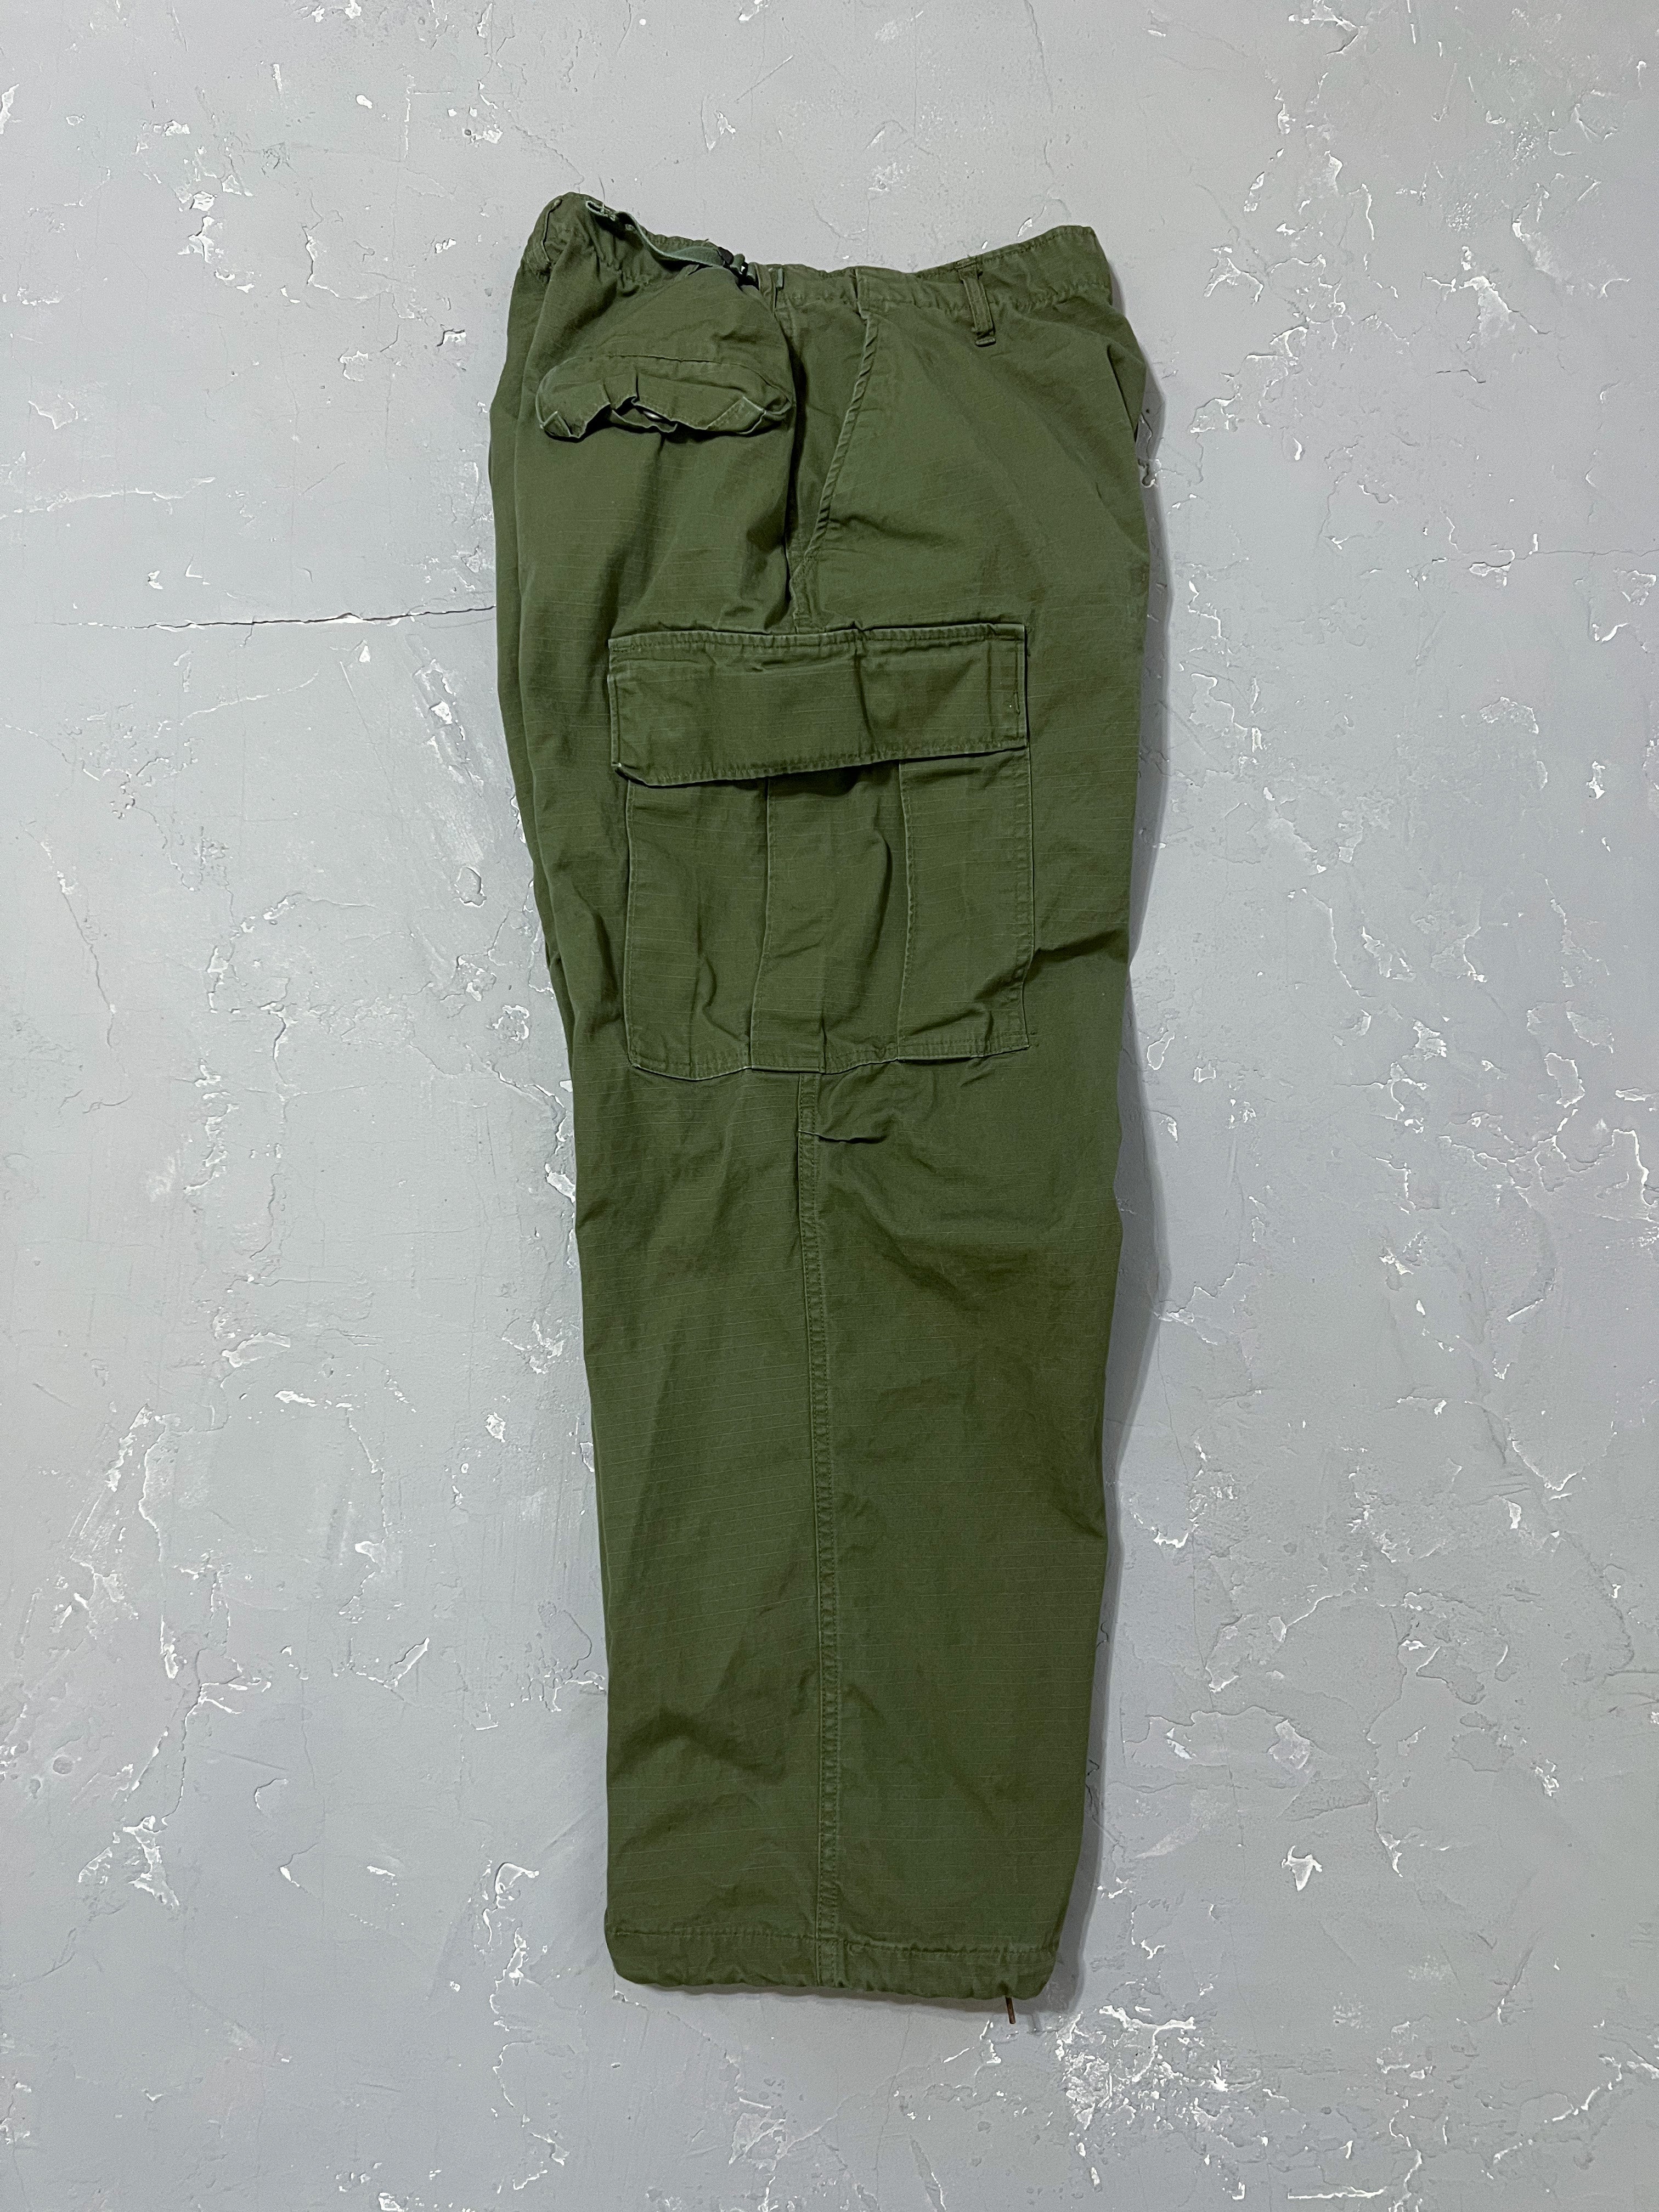 1969 Vietnam War OG-107 Tropical Combat Pants [26-32 x 30]